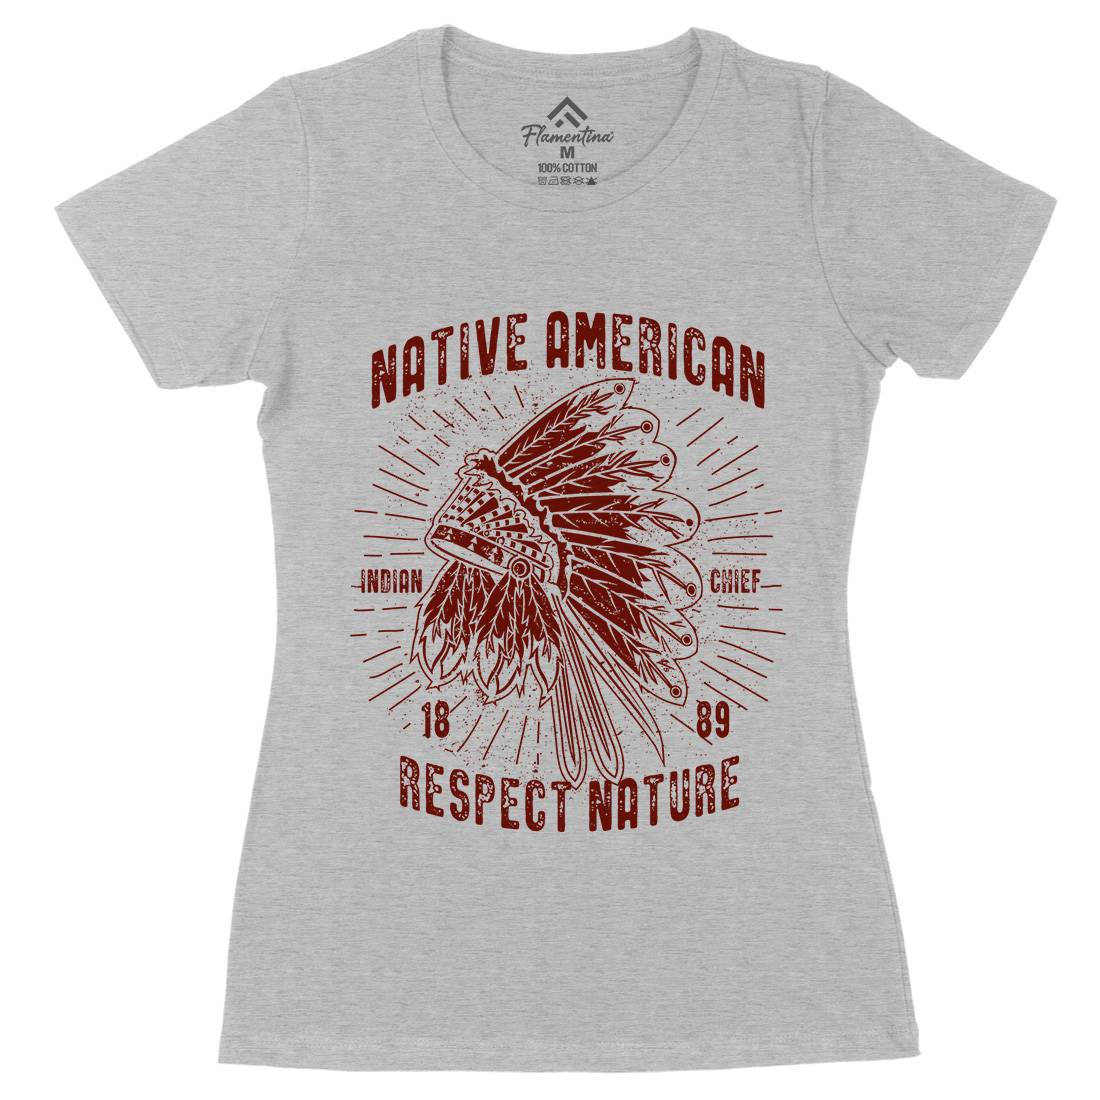 Native American Womens Organic Crew Neck T-Shirt Motorcycles A093